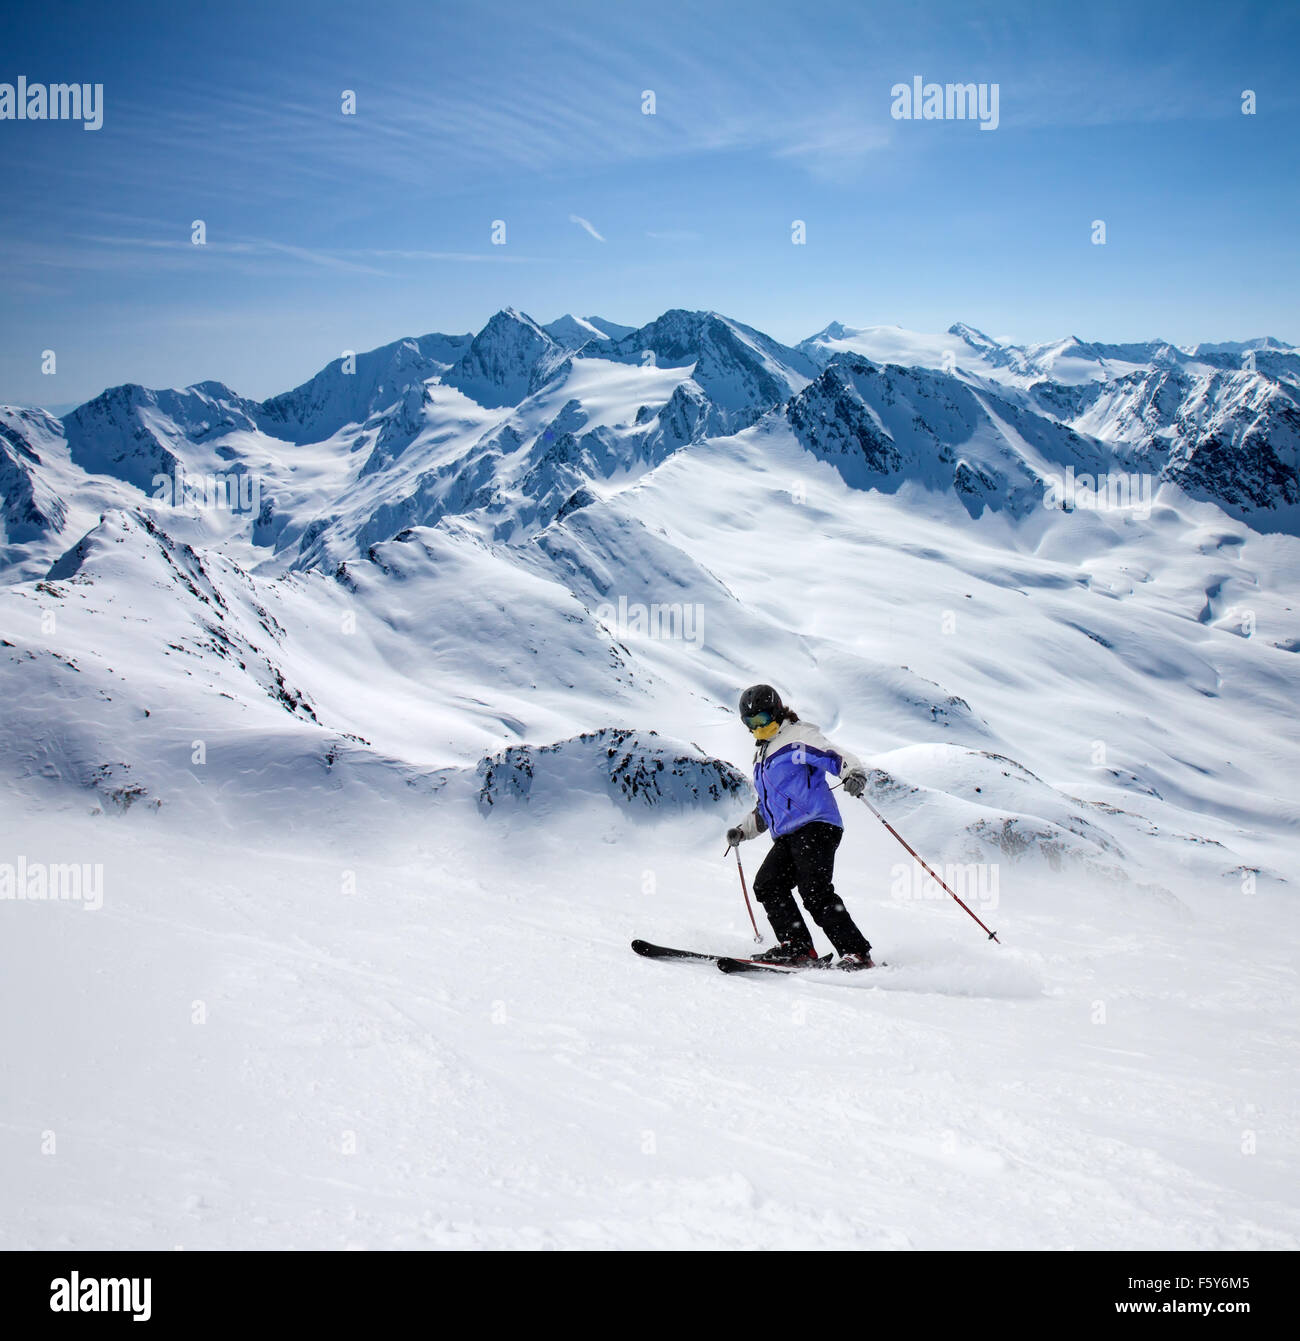 skier, extreme winter sport Stock Photo